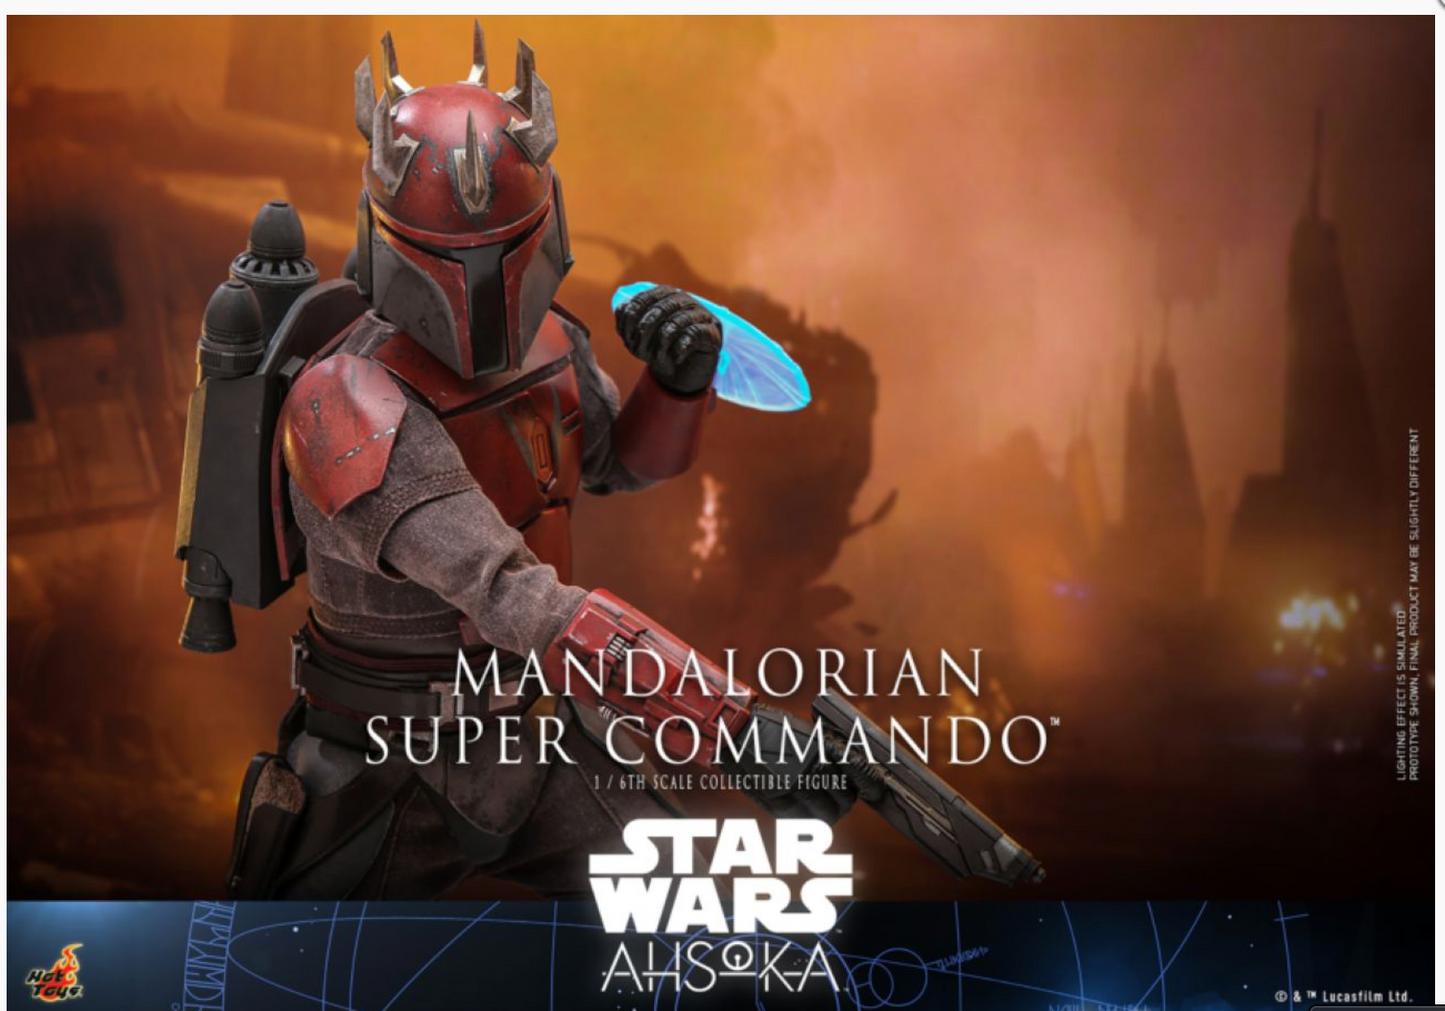 Star Wars: Ahsoka - Mandalorian Super Commando 1:6 Scale Collectable Action Figure